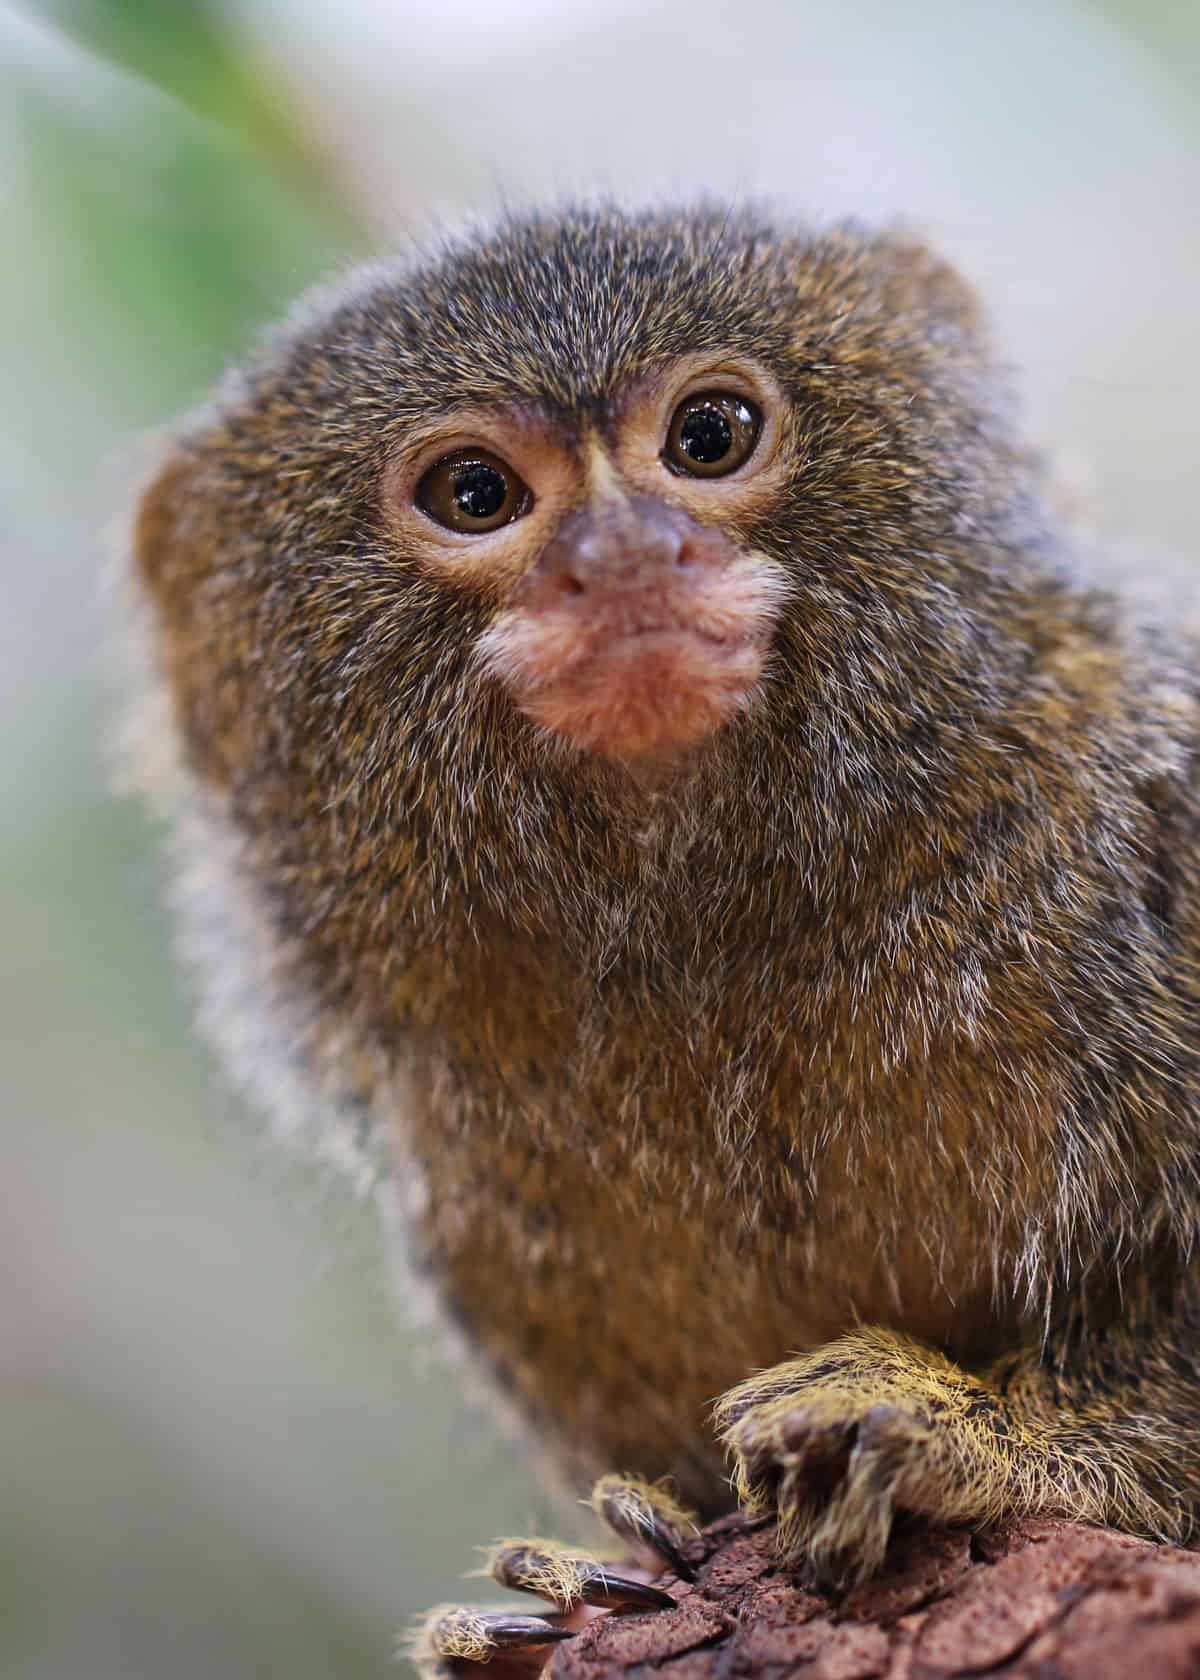 Worlds smallest monkey